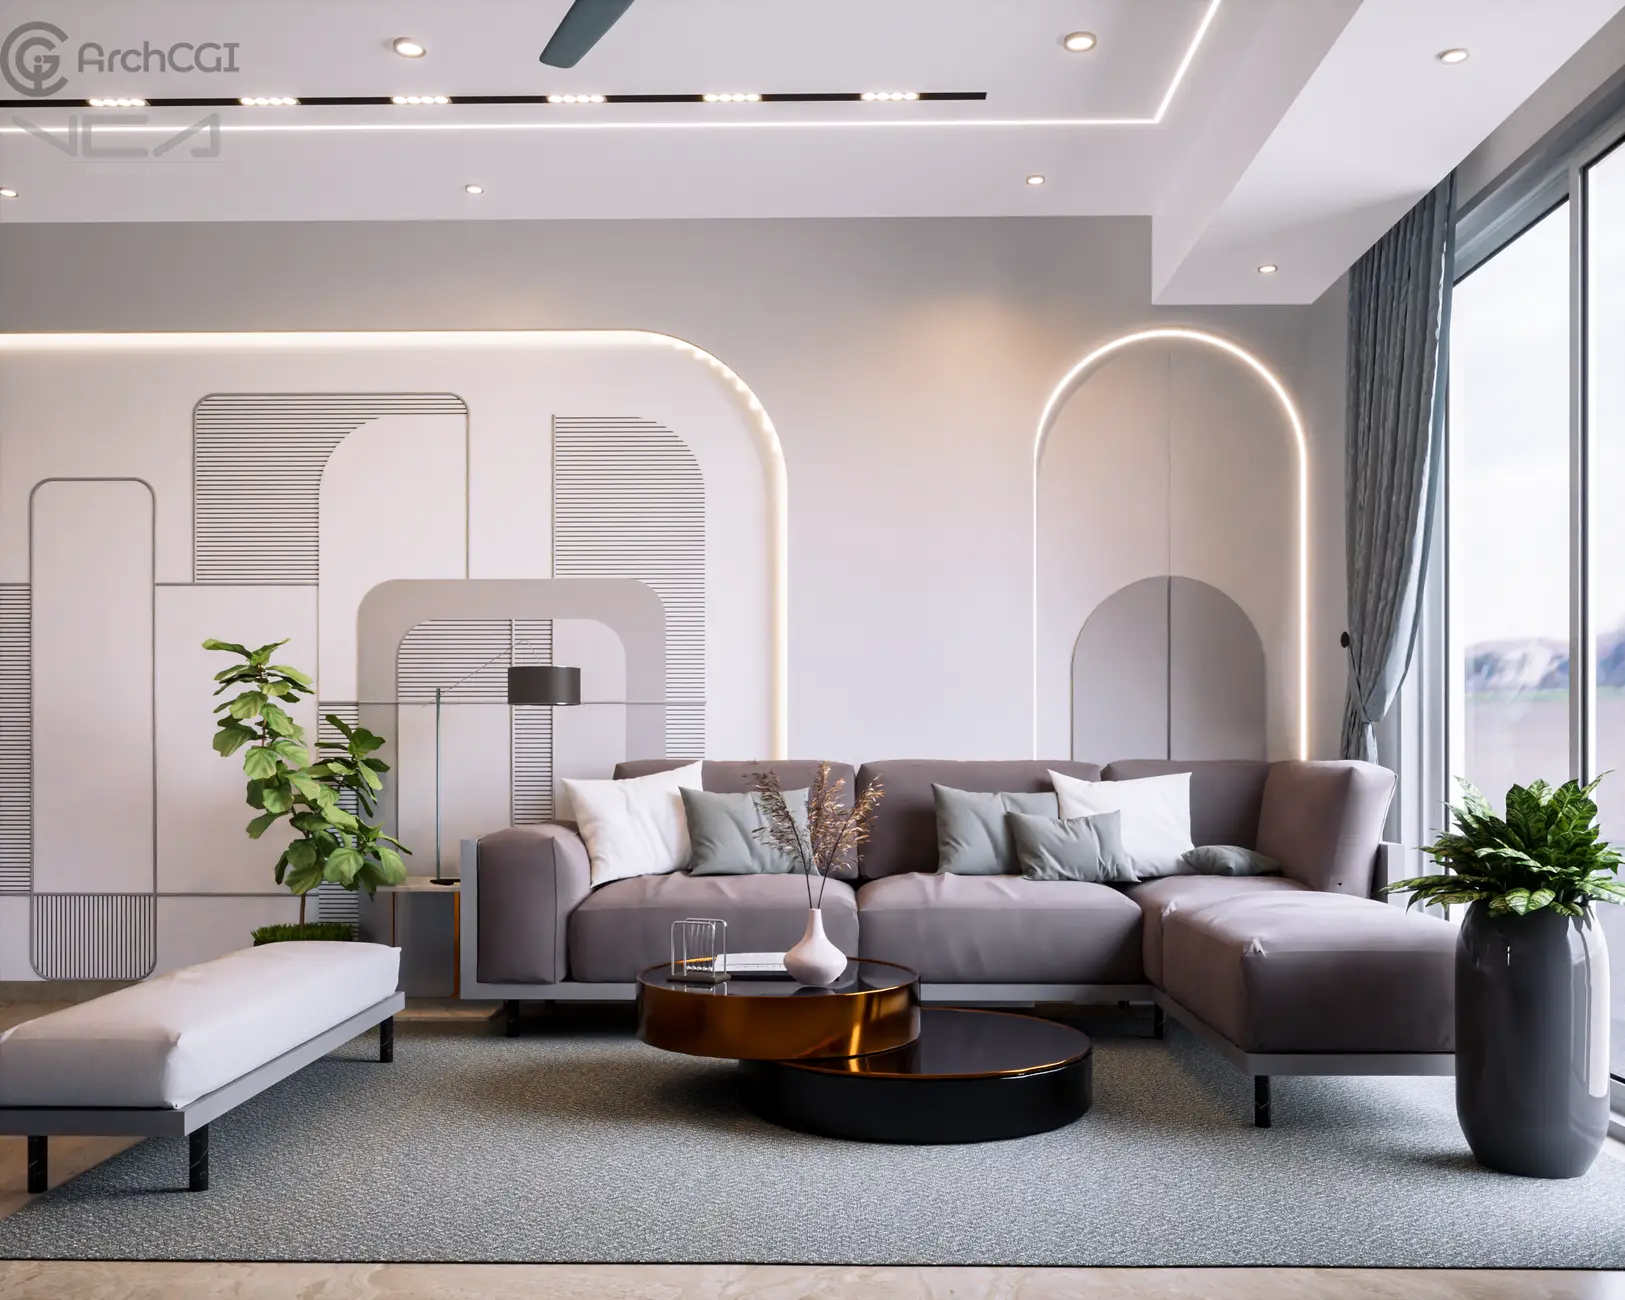 Modern Living Room Interior | Living Room Inspiration | ArchCGI